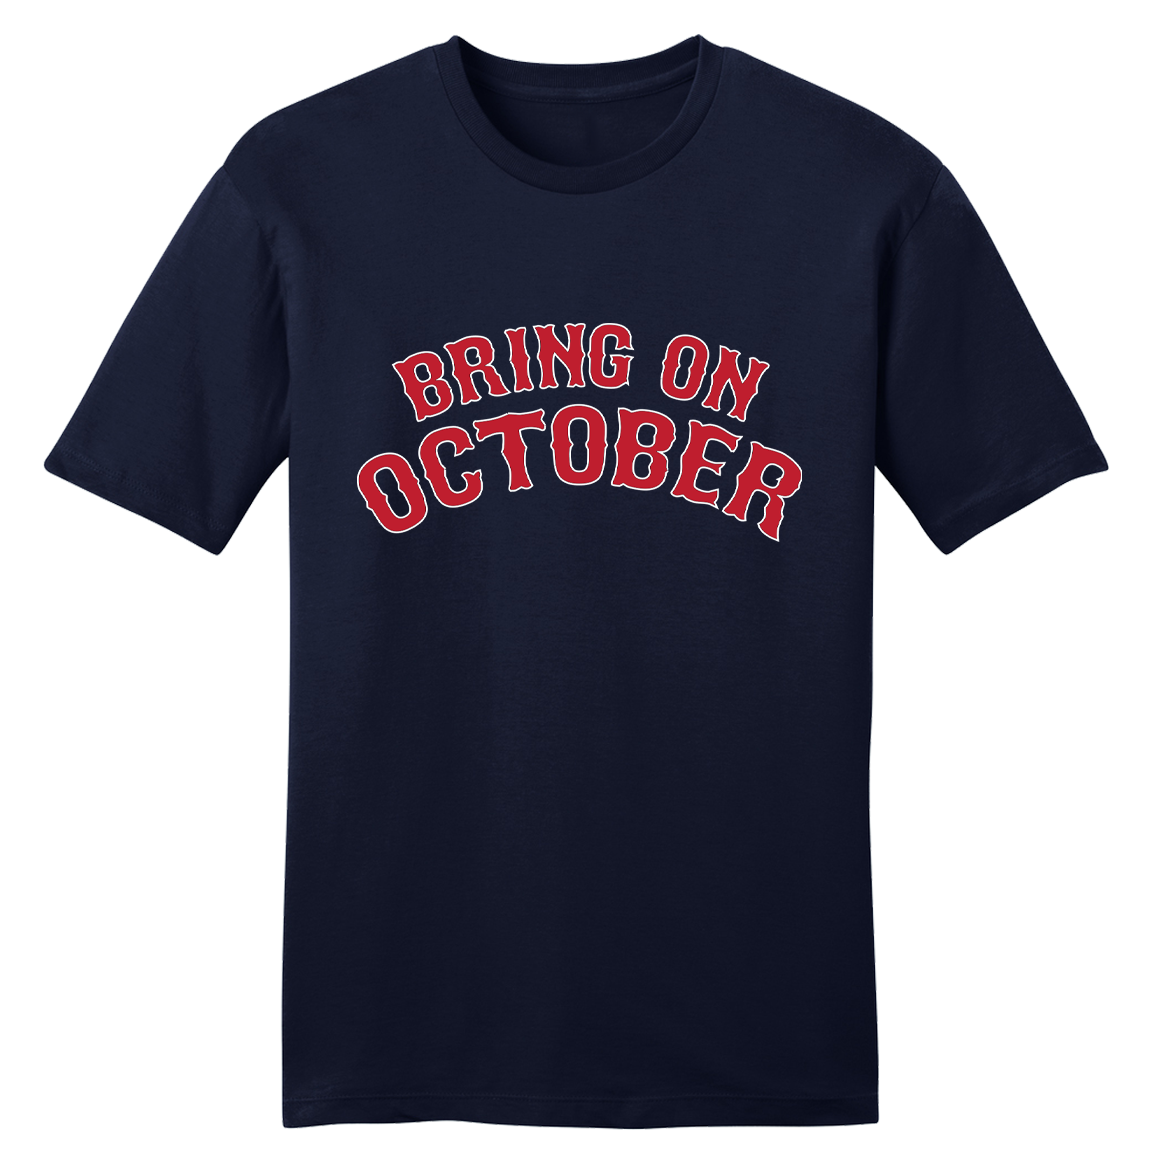 Bring on October Boston Rally Tee